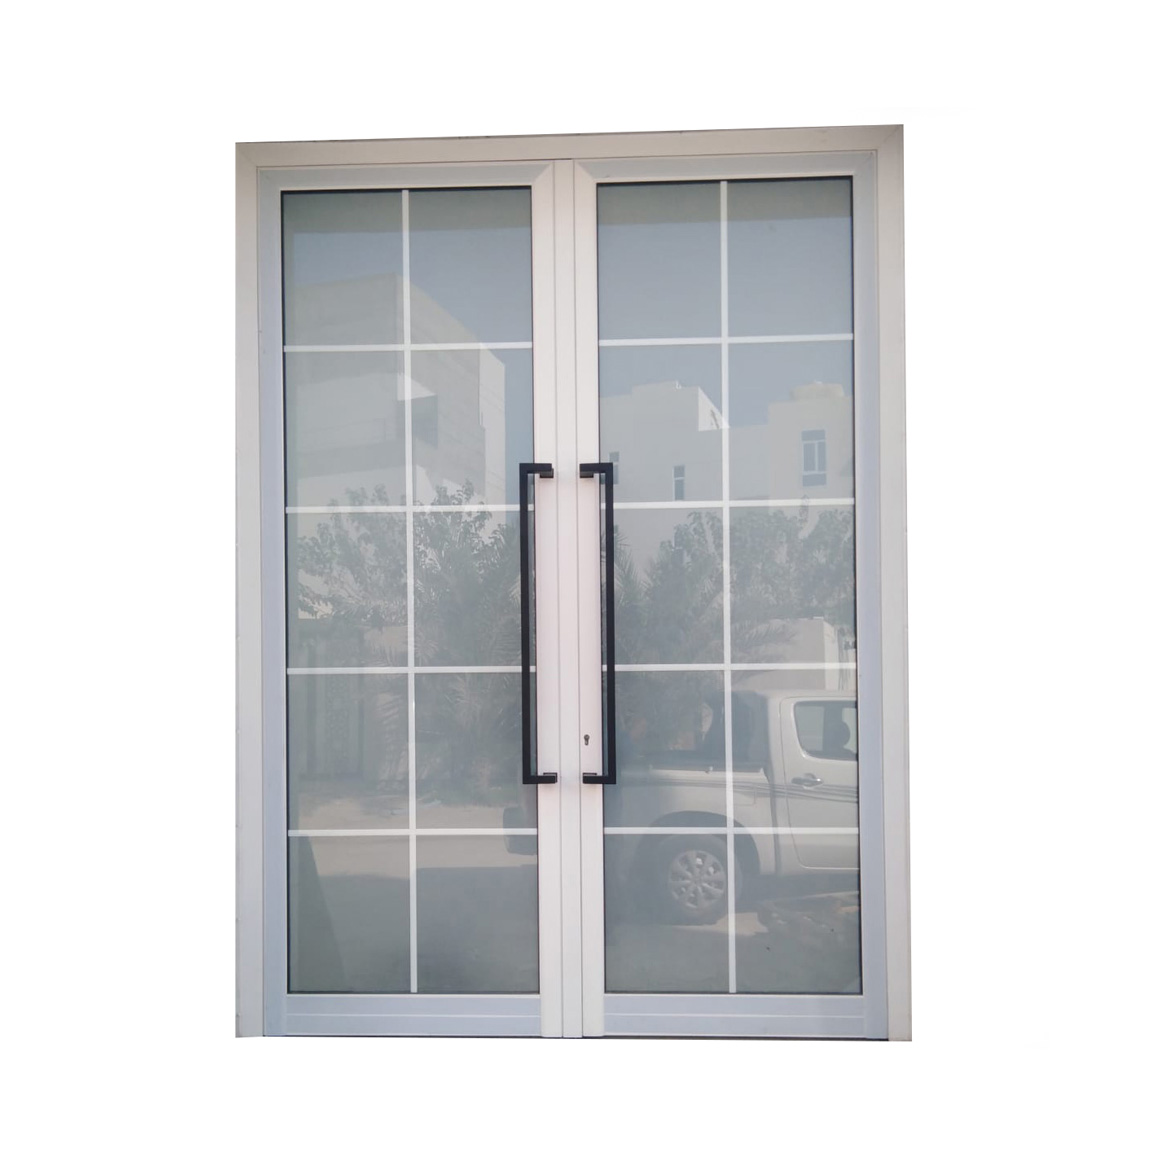 Buy White Main Door Online | Manufacturing Production Services | Qetaat.com